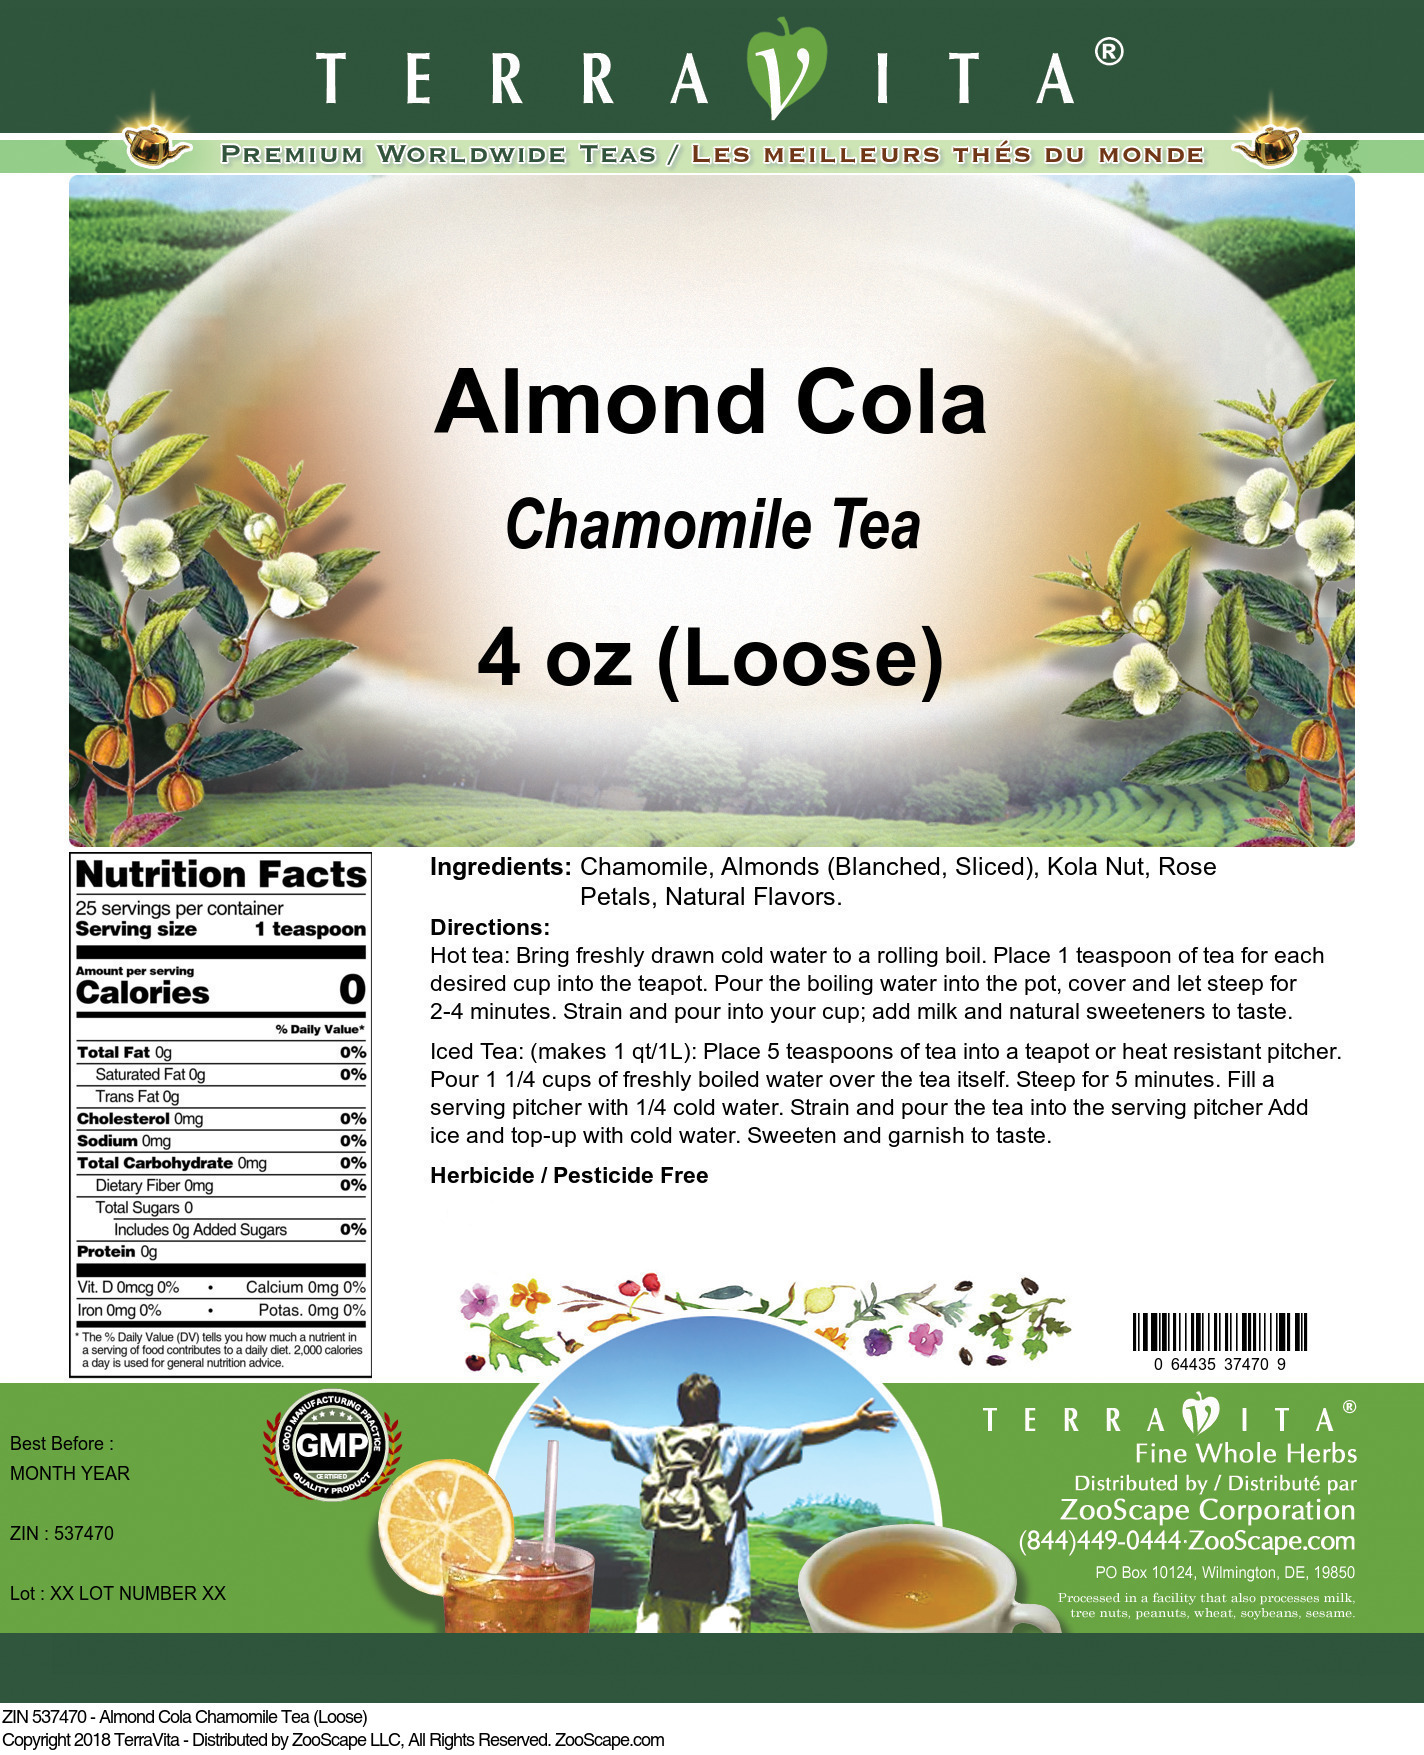 Almond Cola Chamomile Tea (Loose) - Label